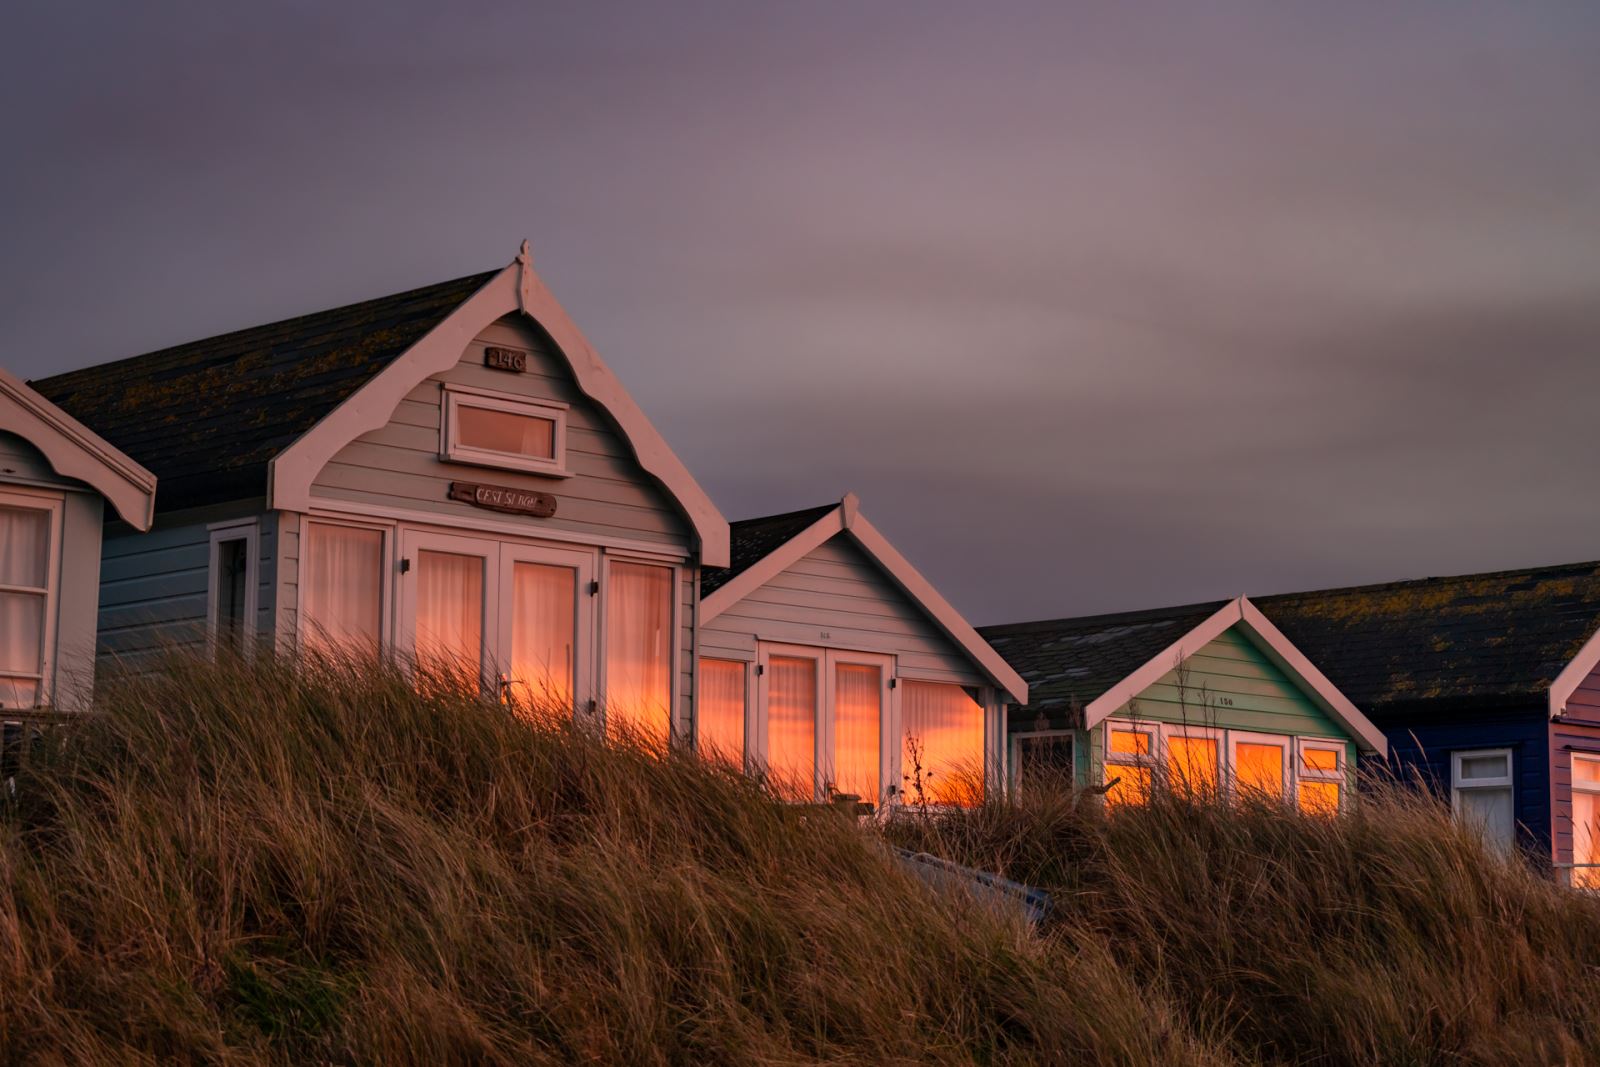 sunset reflecting on mudeford spit beach huts 